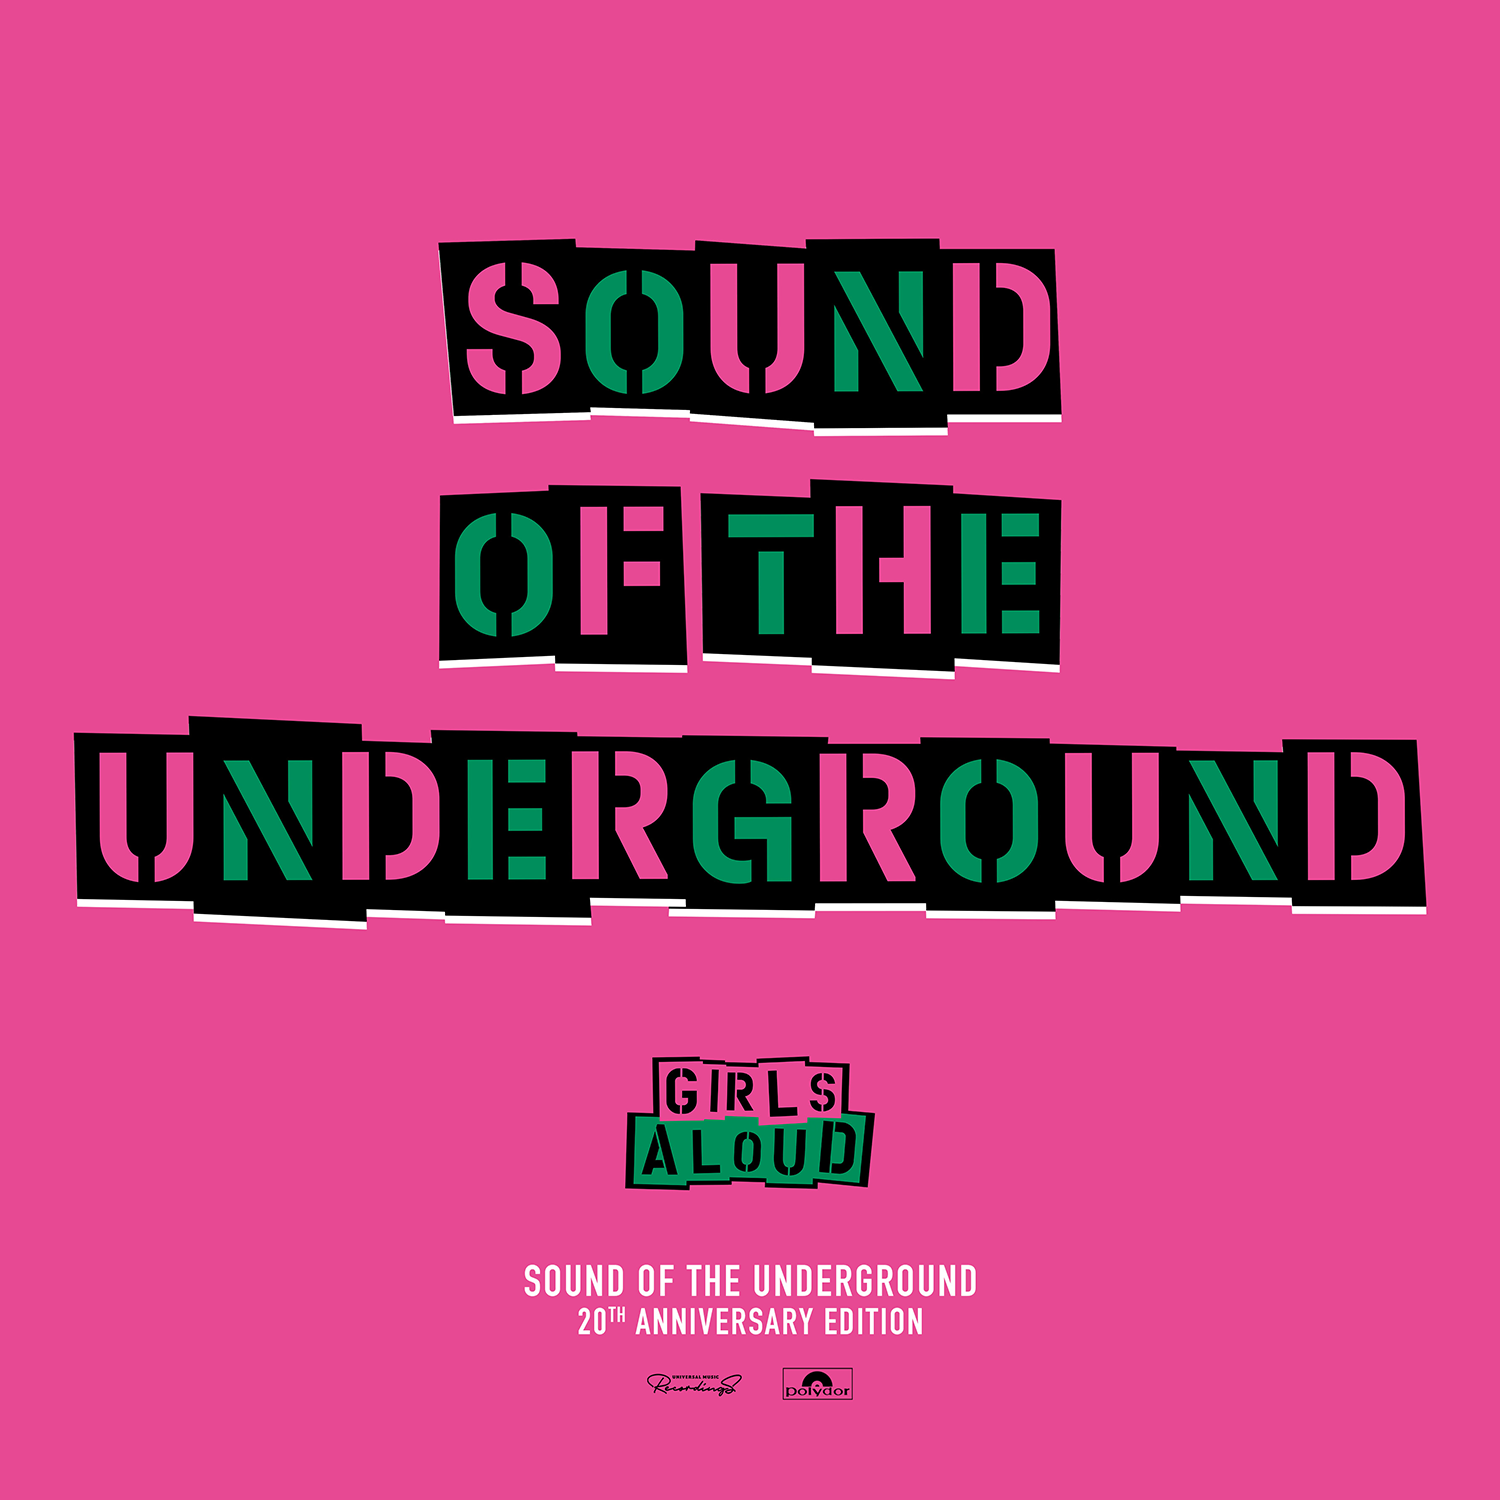 Sound Of The Underground (20th Anniversary Edition): Green Vinyl LP + Exclusive 12x12" Print